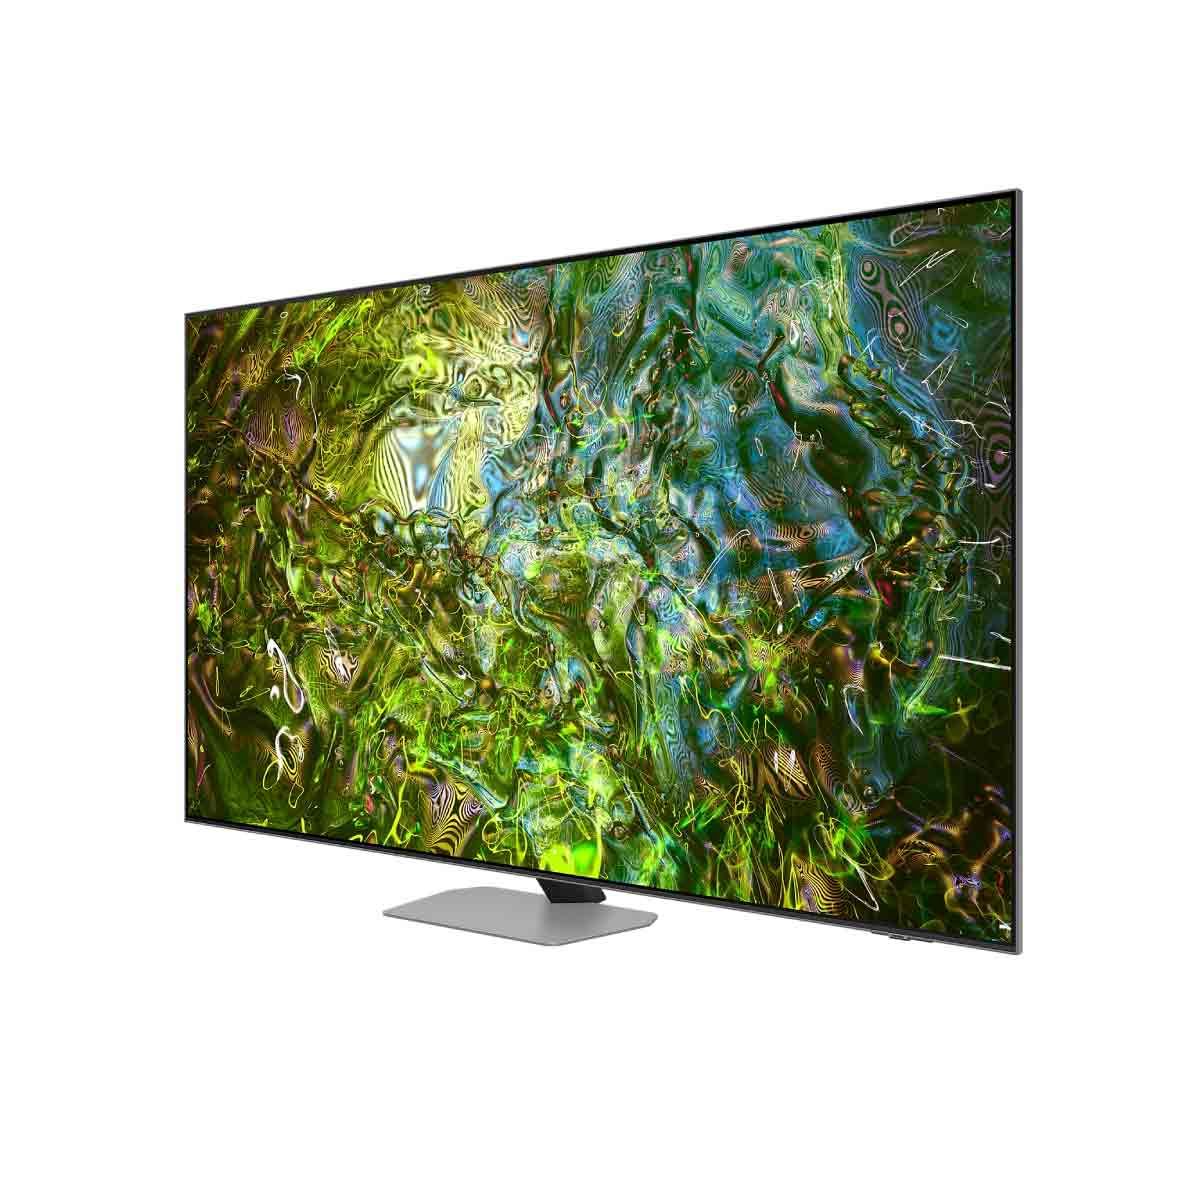 SAMSUNG Neo QLED 4K Smart TV รุ่น QA85QN90DAK Series QN90D 144Hz สมาร์ททีวี ขนาด 85 นิ้ว